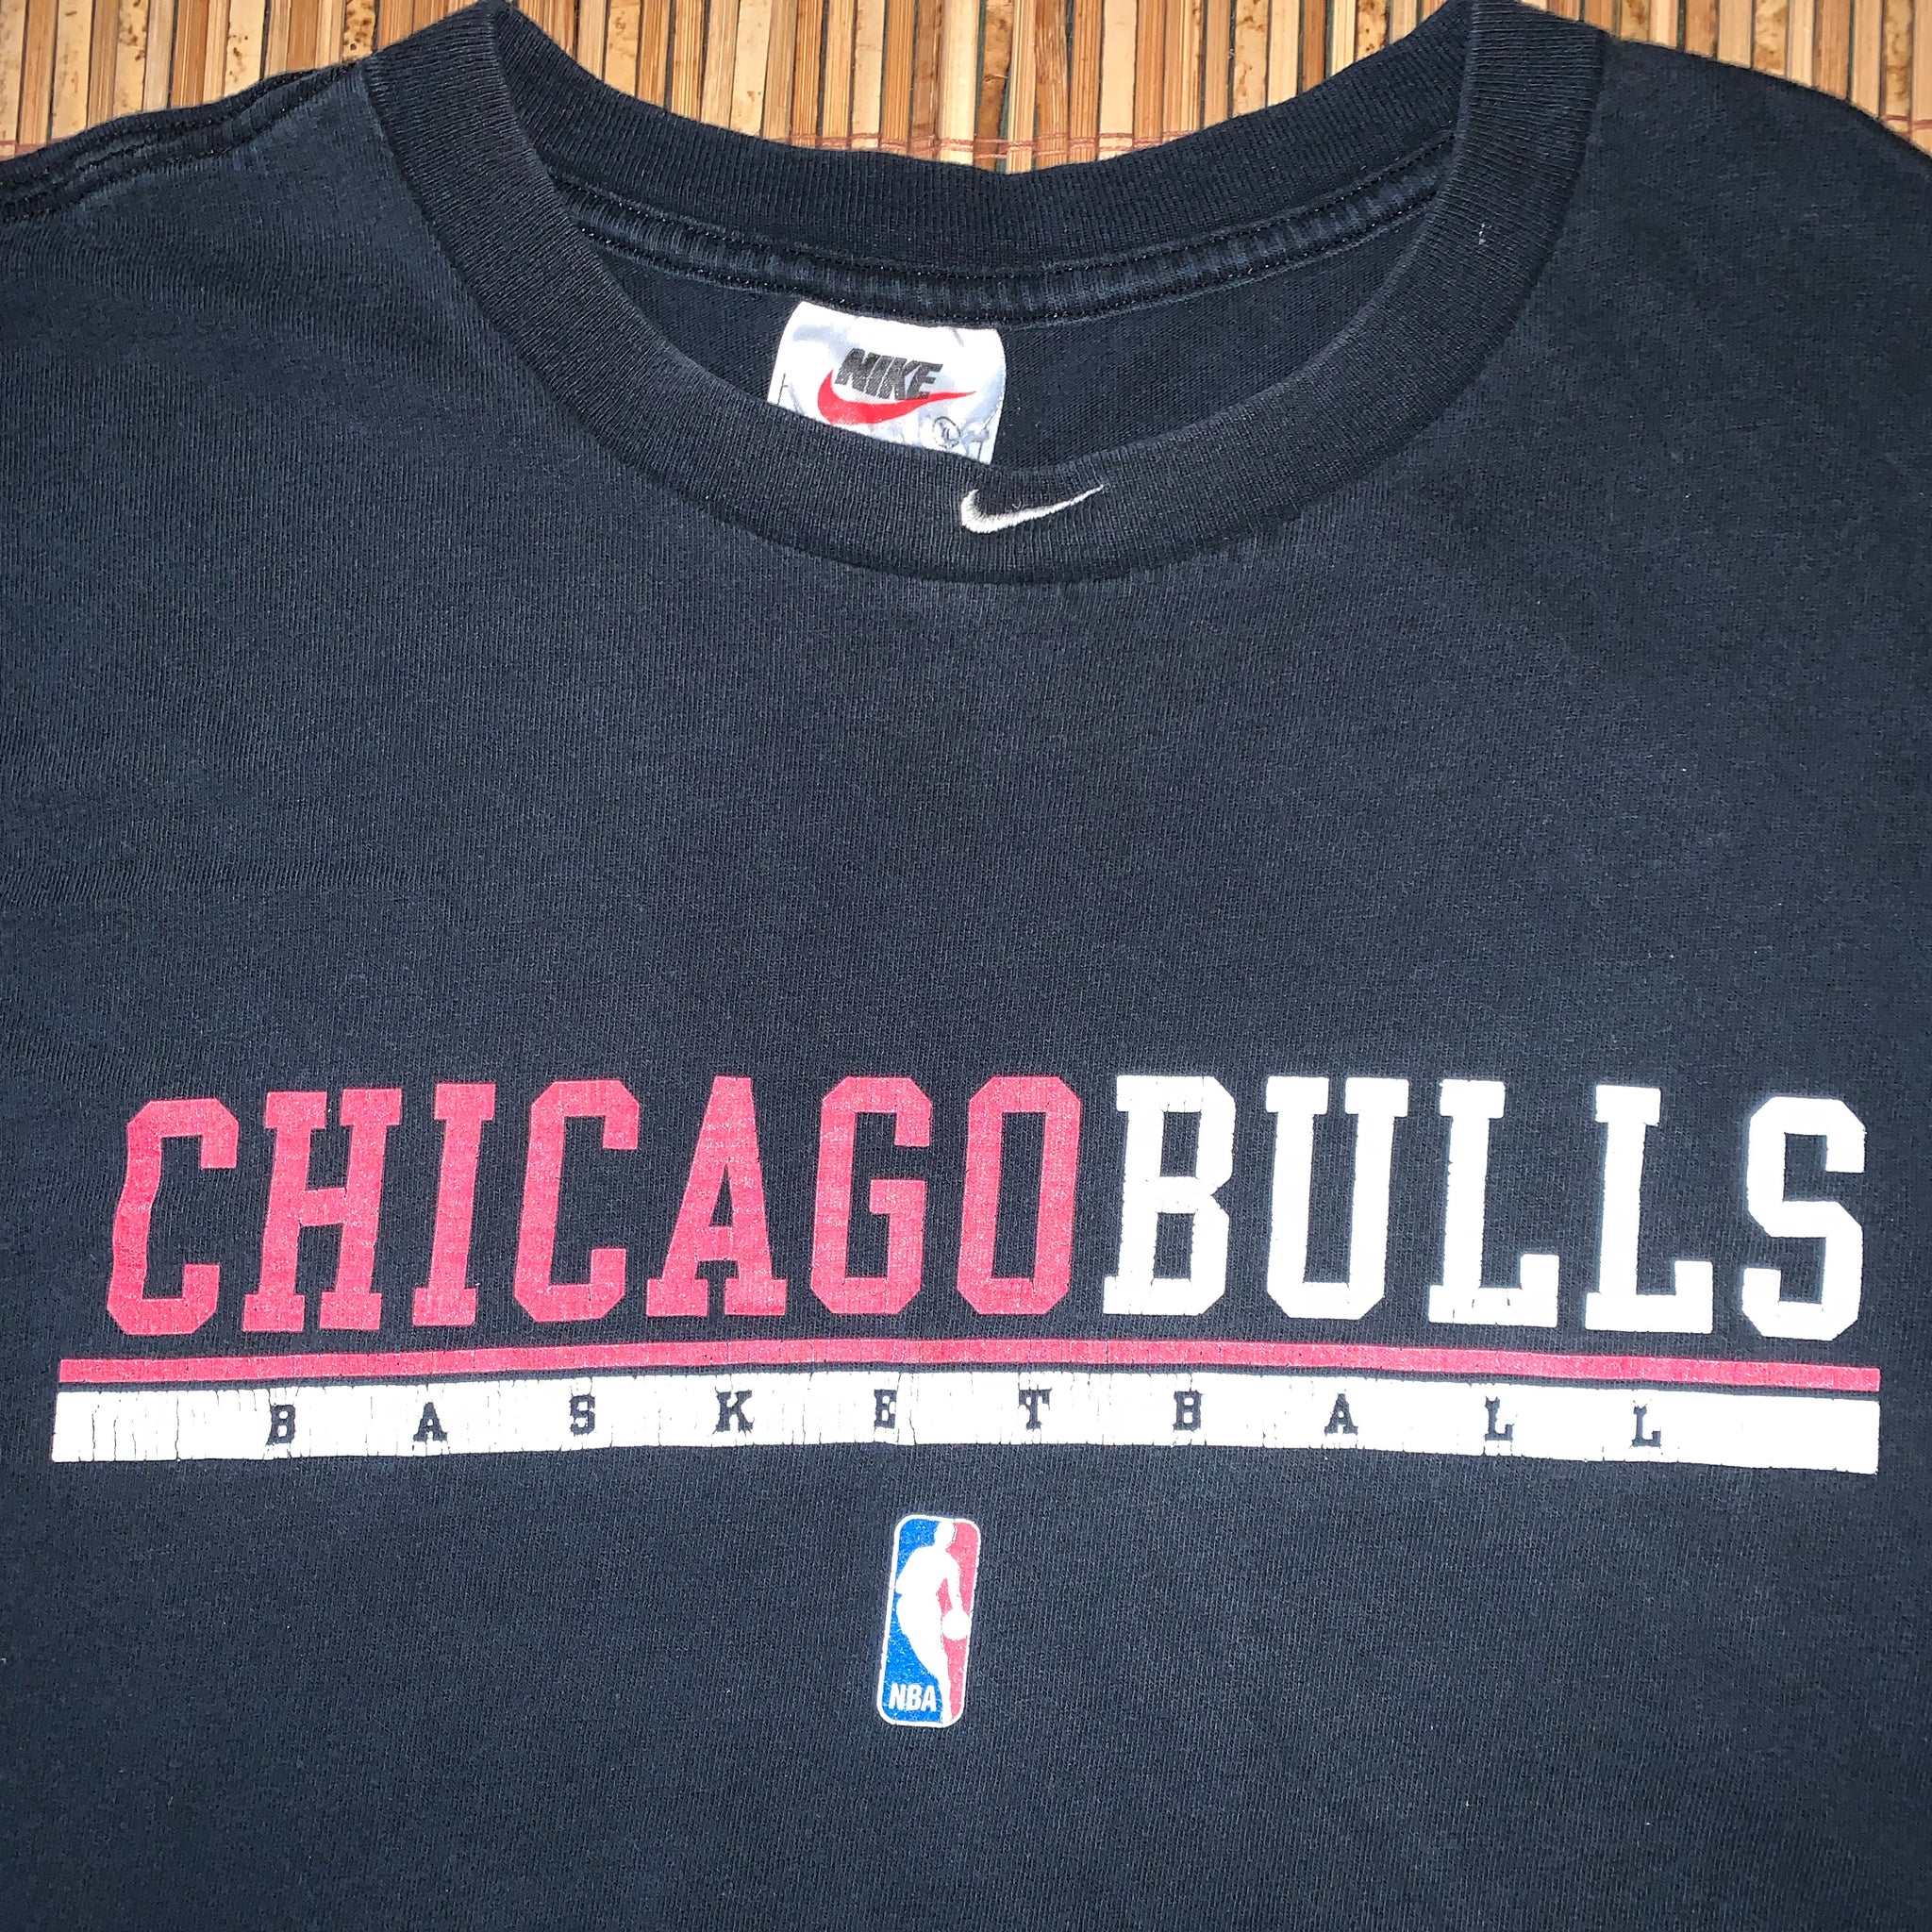 Vintage Chicago Bulls Shirt - XL